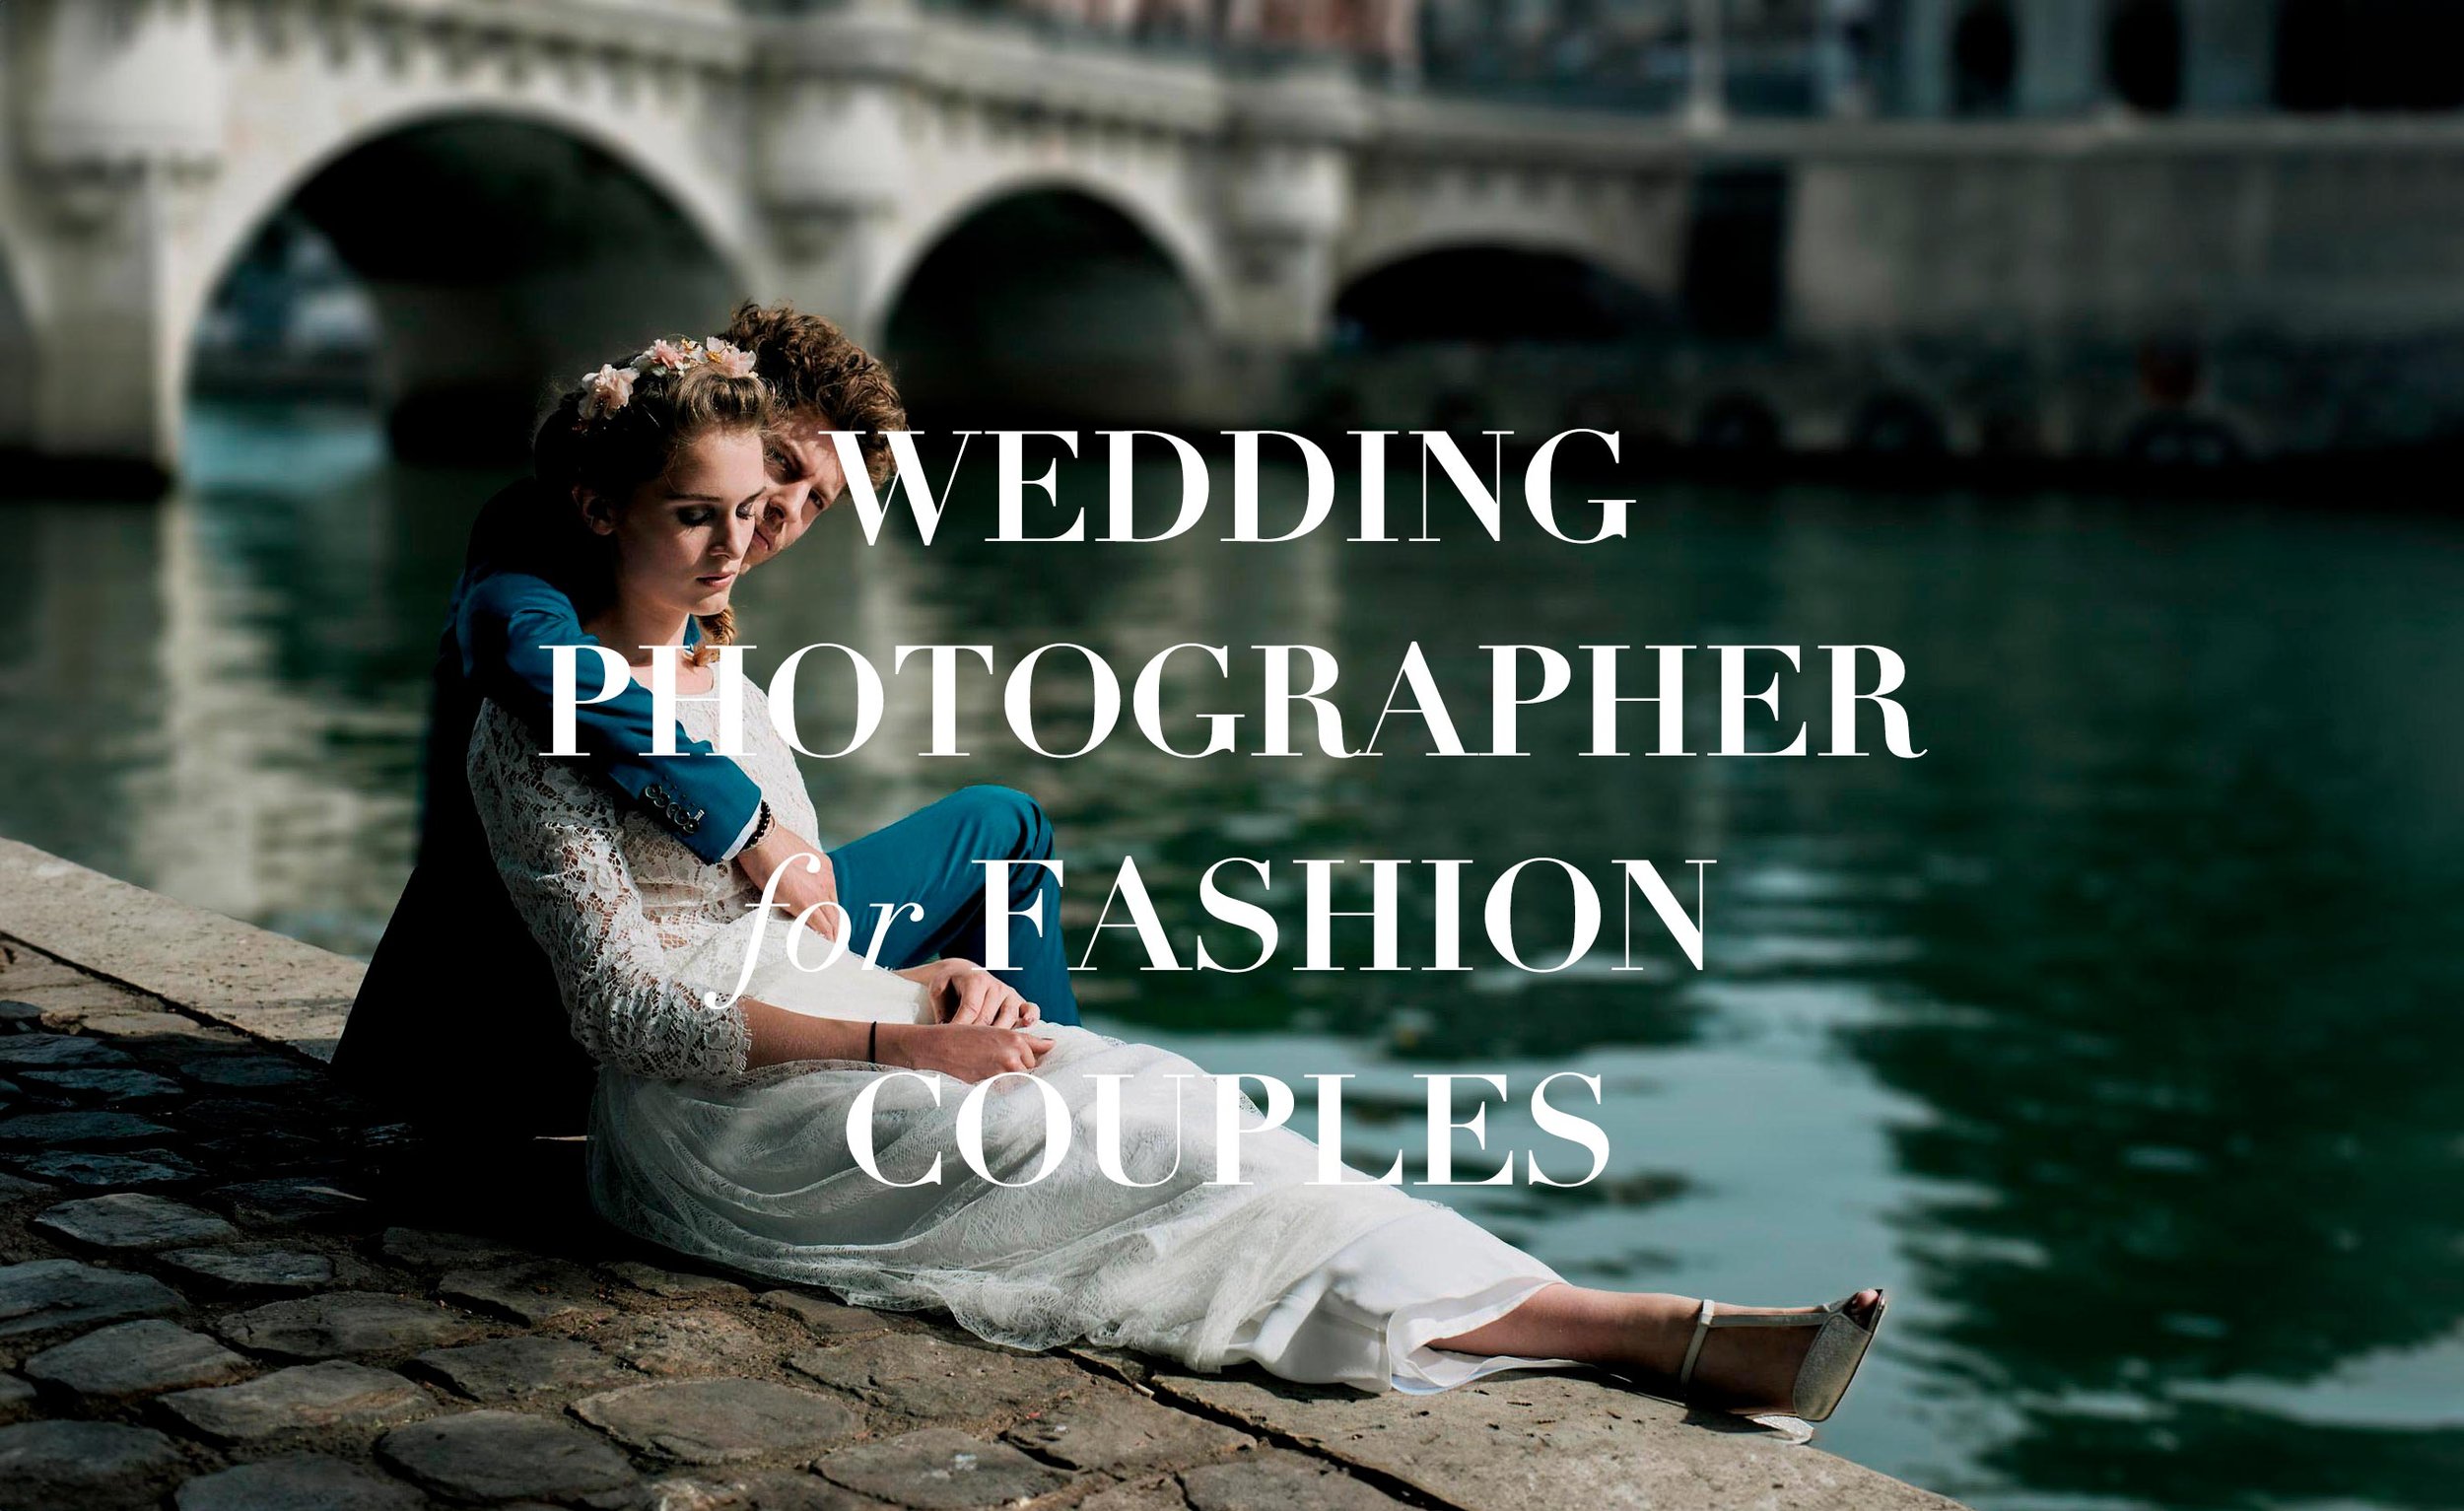 David_picchio_fashion_wedding_photographer_couple_paris_france_elopment_homepage_10a.jpg